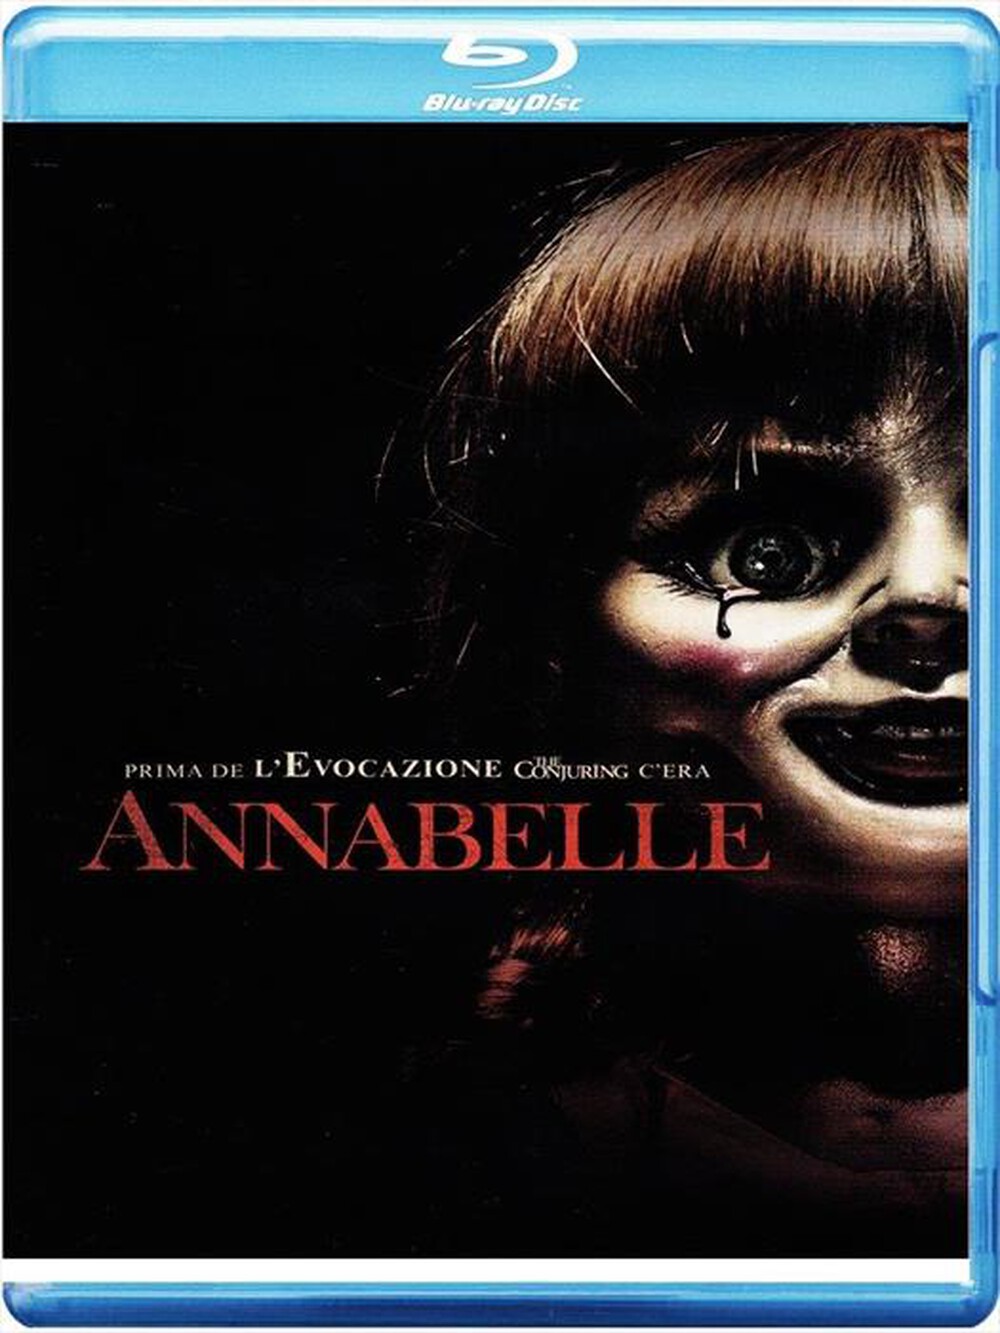 "WARNER HOME VIDEO - Annabelle"